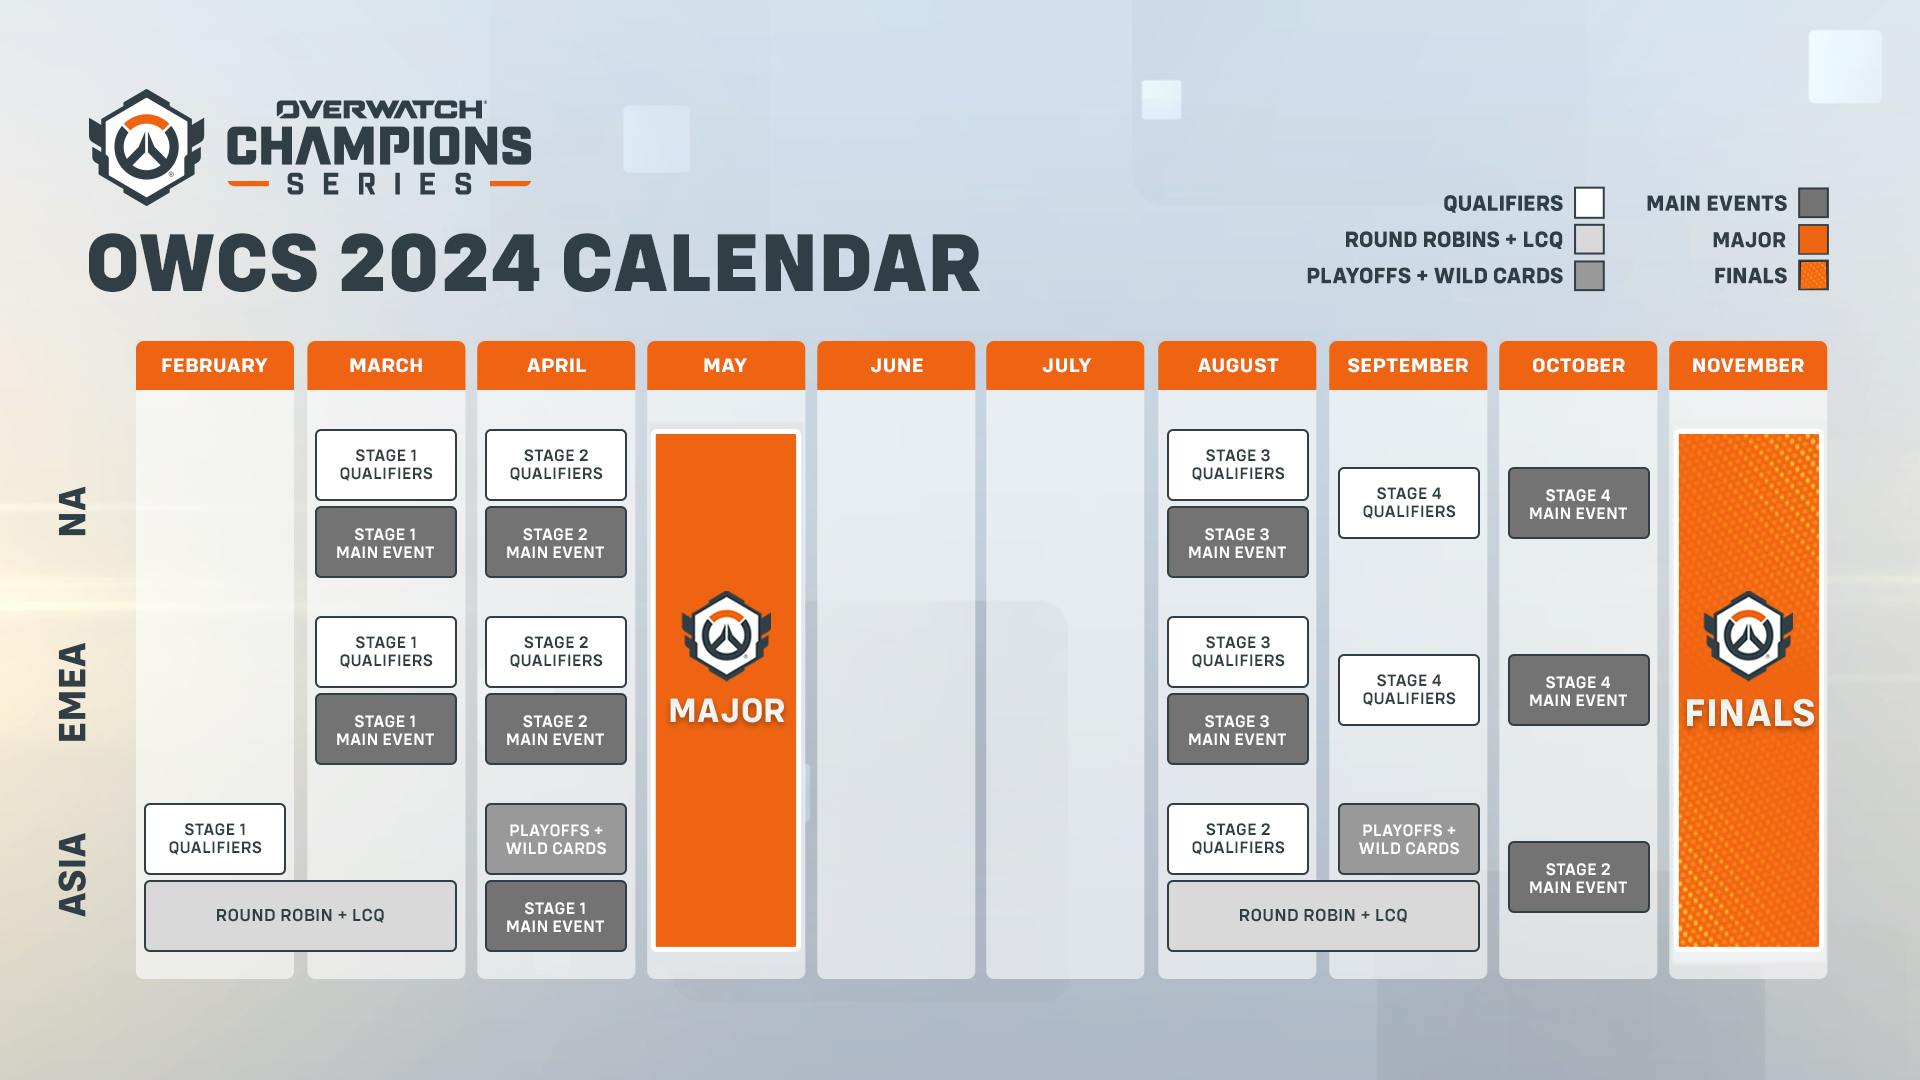 Overwatch Champions Series Schedule